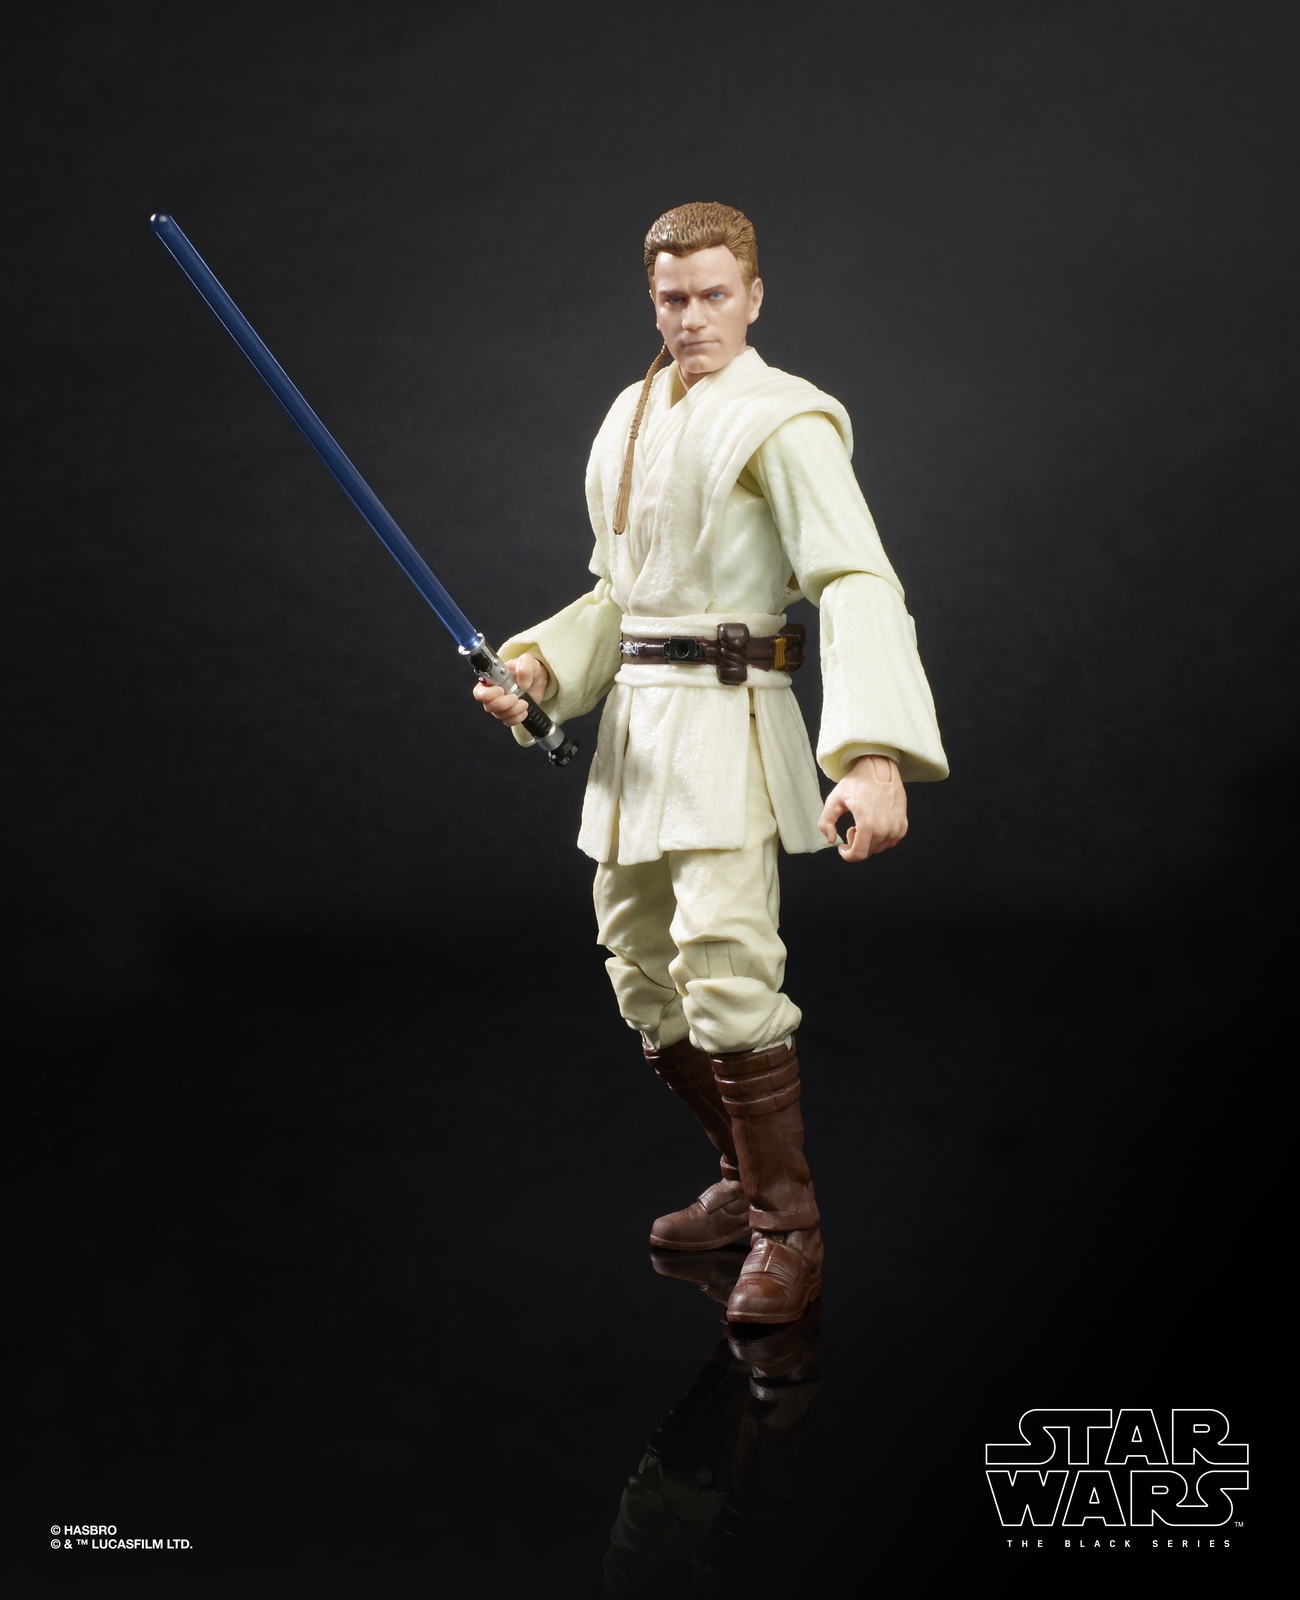 STAR WARS THE BLACK SERIES 6-INCH Figure Assortment - Obi-Wan Kenobi (oop 3).jpg